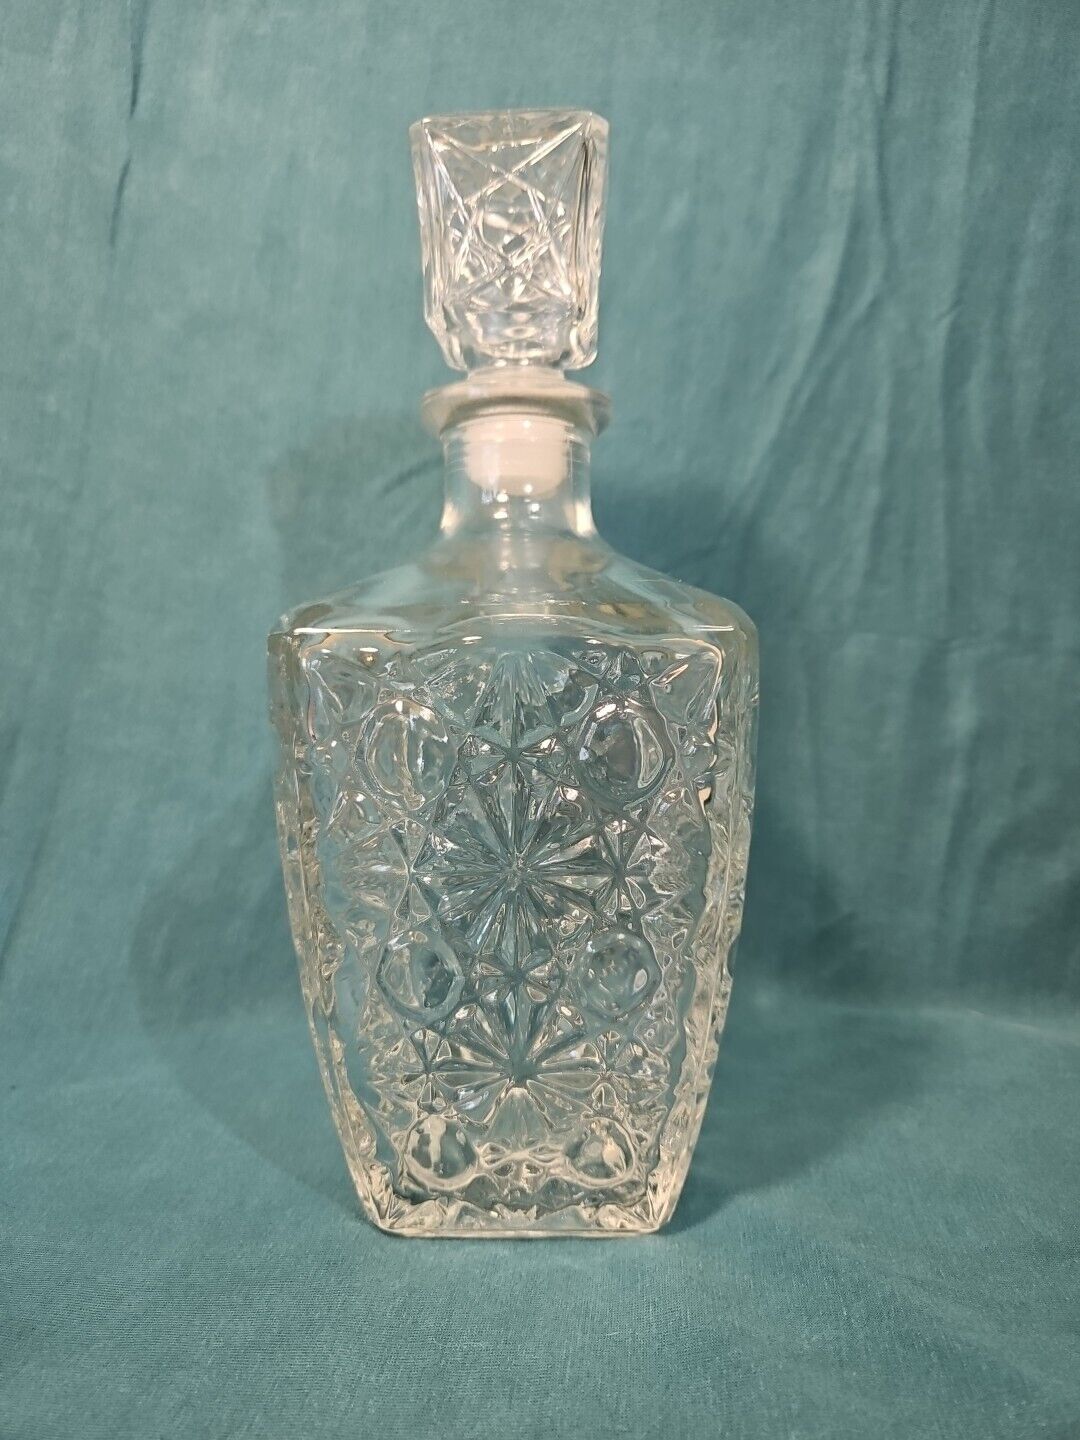 Glass Decanter With Stopper Whiskey Scotch Vodka Liquor Barware Bar Supplies